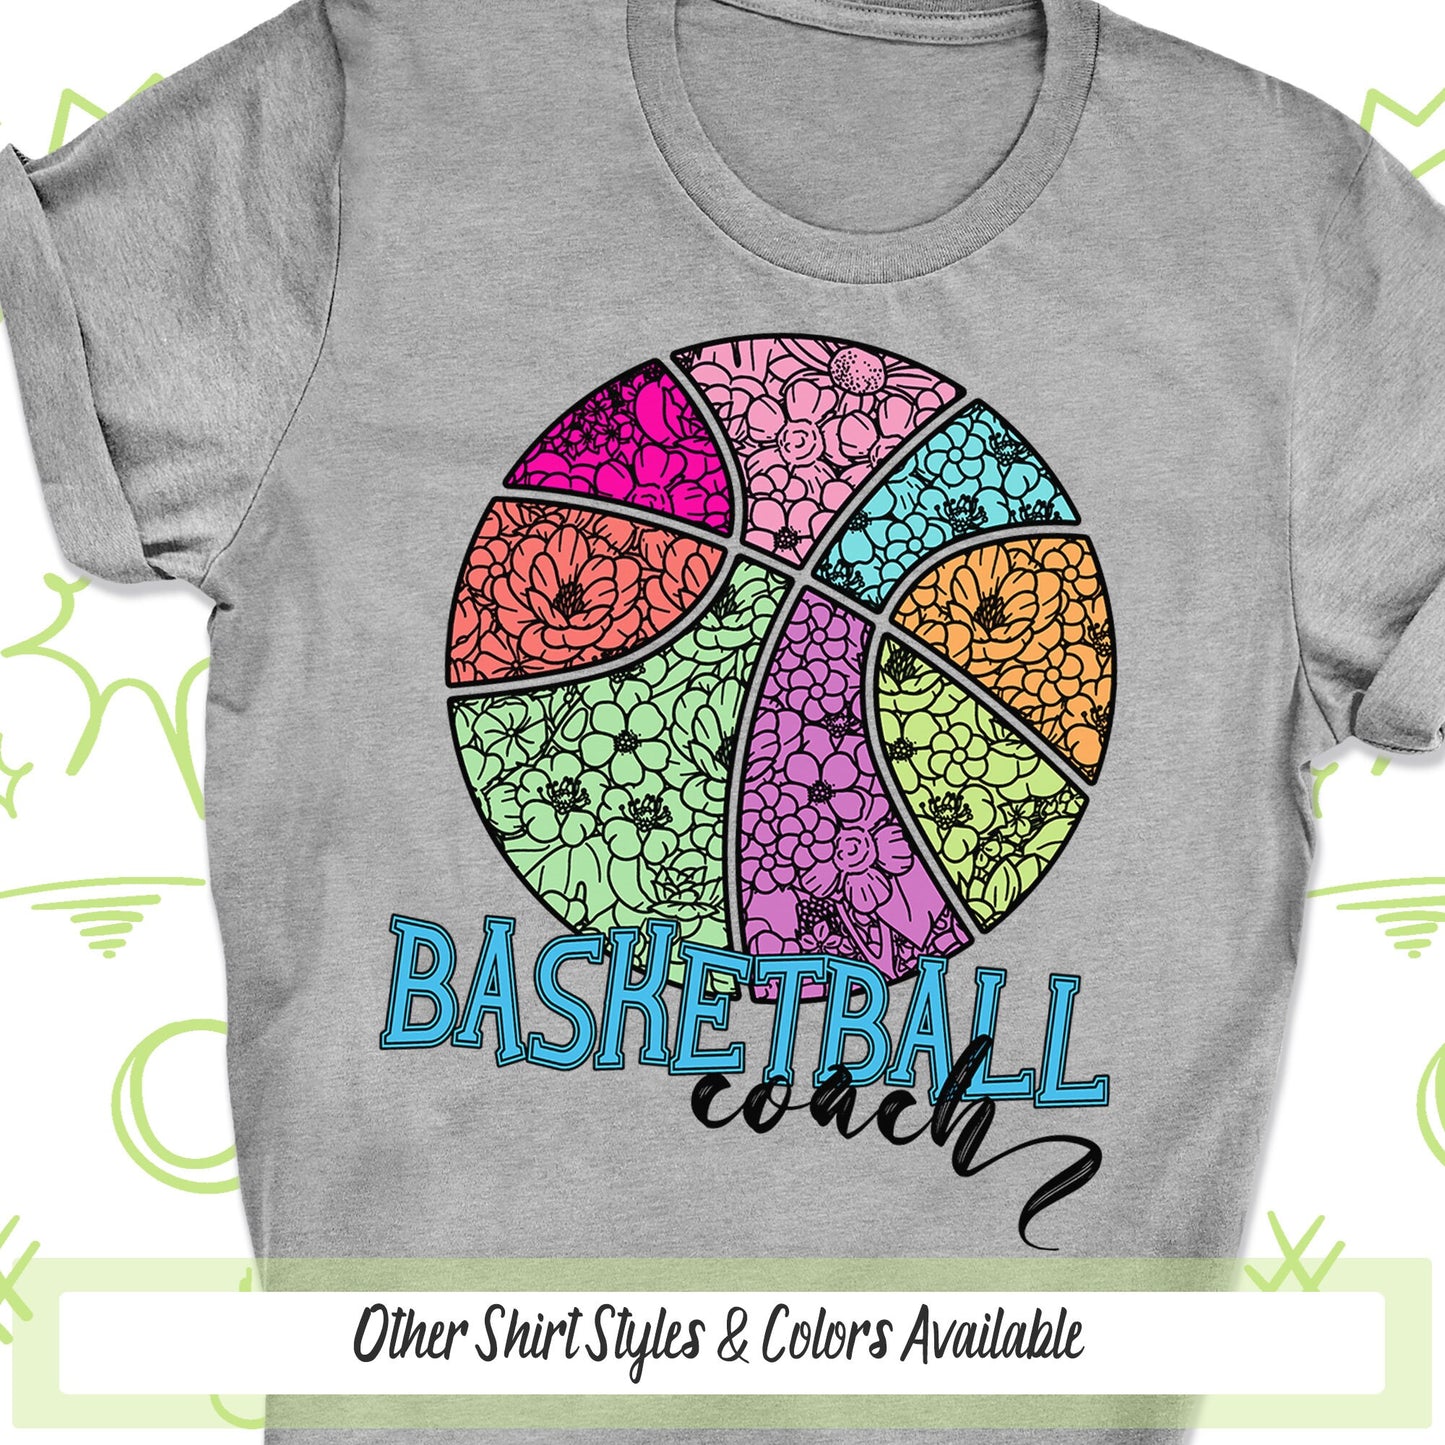 Basketball Coach Shirt, Basketball Apparel, Coaches Gift, Coach Appreciation, Basketball T Shirt, Game Day Shirt, Team Pride, School Spirit